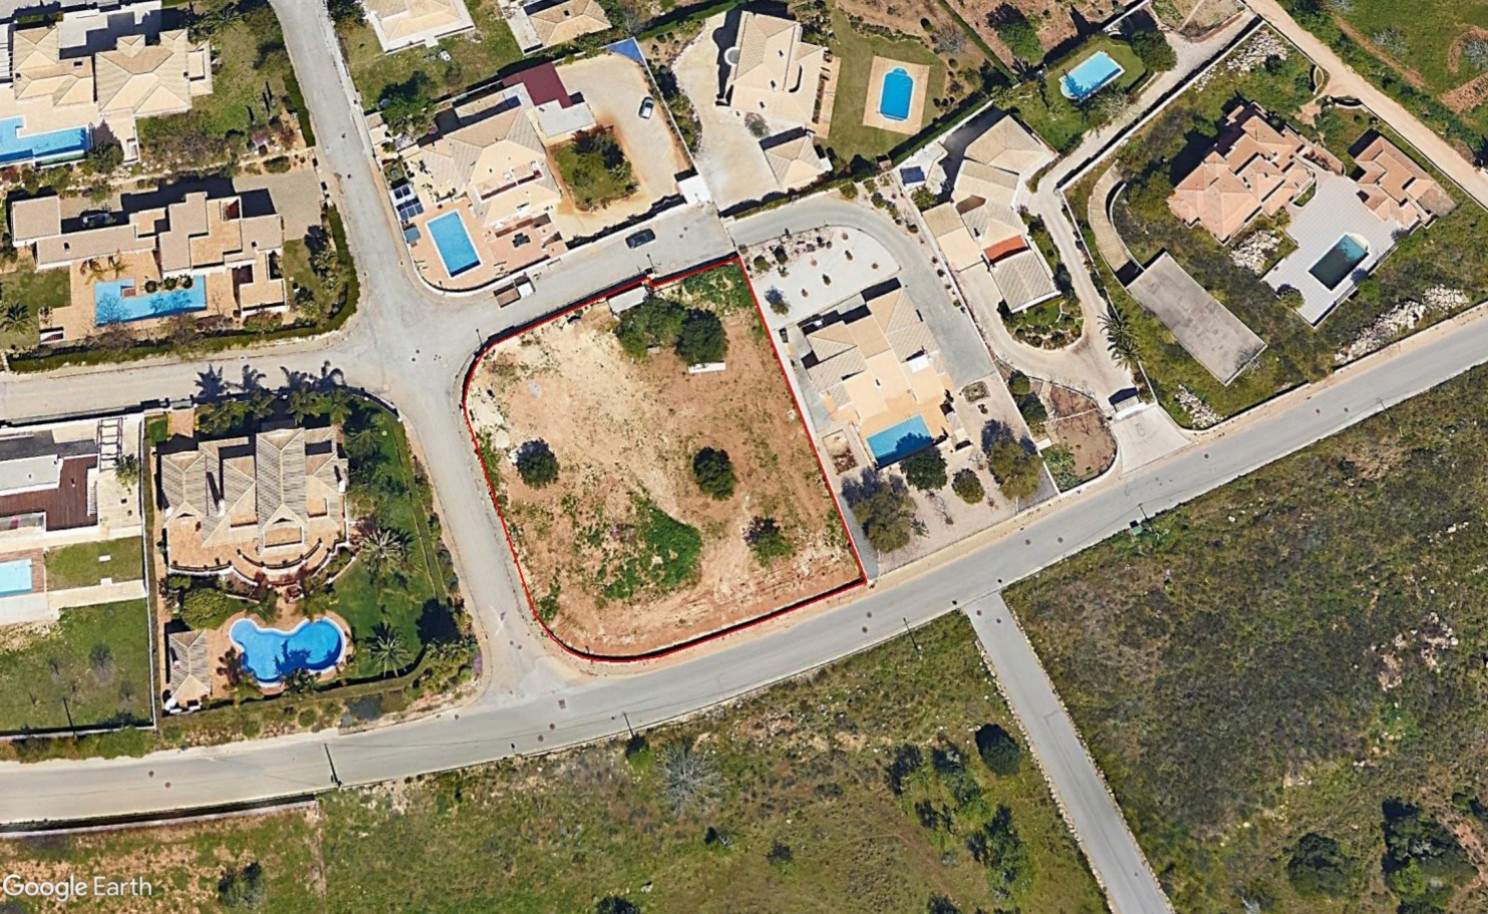 Terrain à bâtir, à vendre à Lagos, Algarve_212522